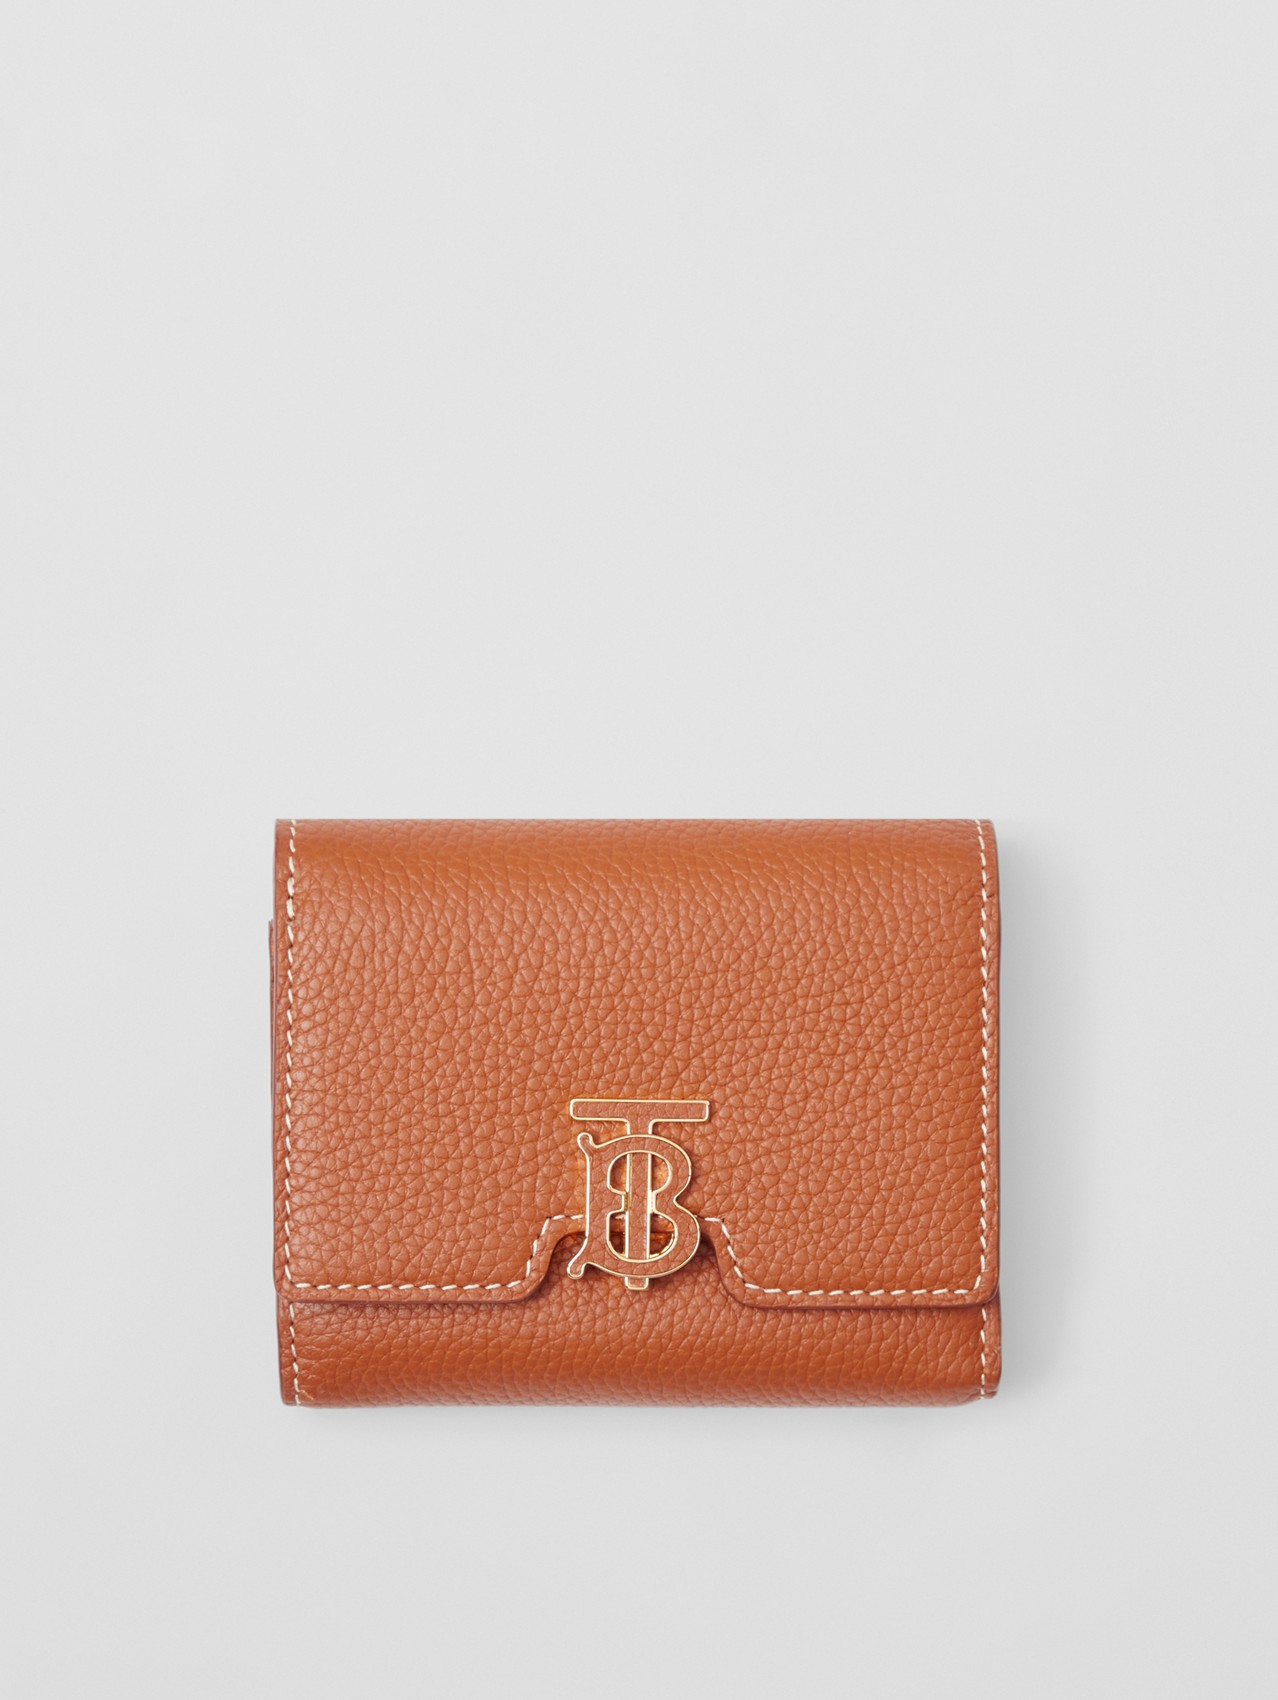 Monogram Motif Grainy Leather Folding Wallet in Warm Russet Brown